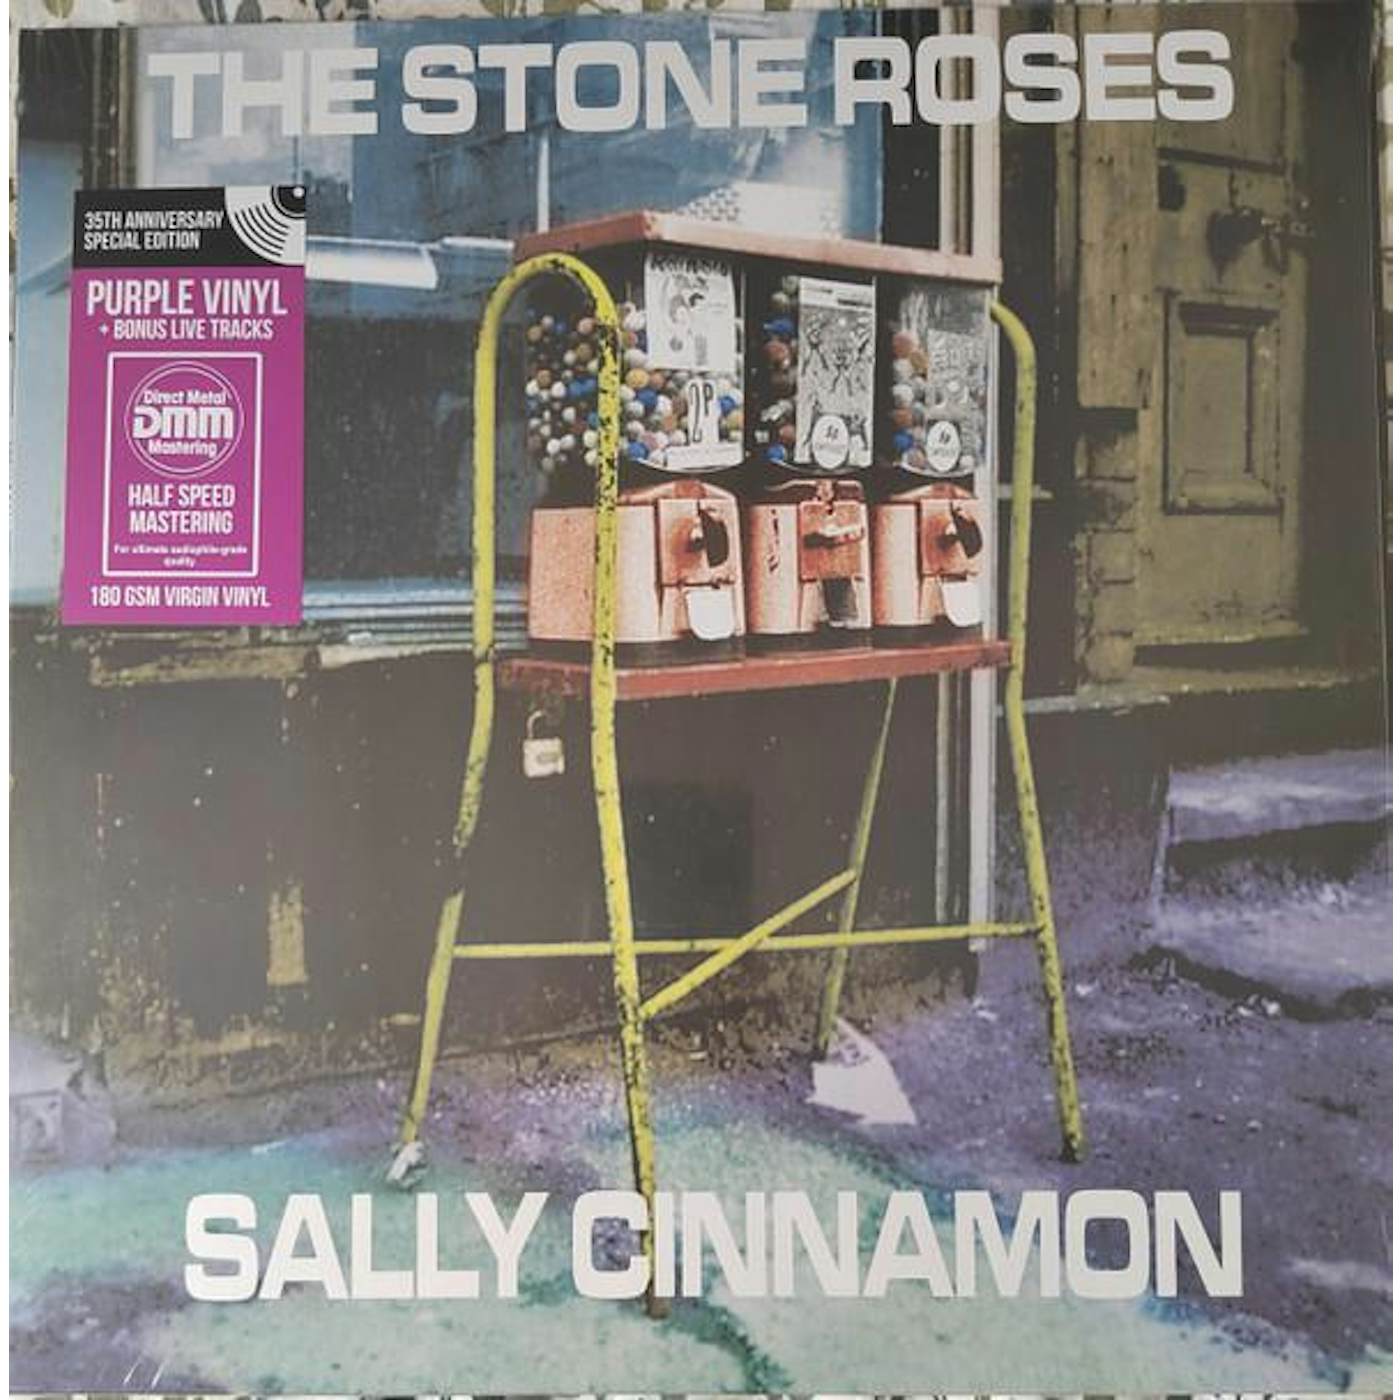 The Stone Roses SALLY CINNAMON/LIVE (180G/PURPLE VINYL) Vinyl Record